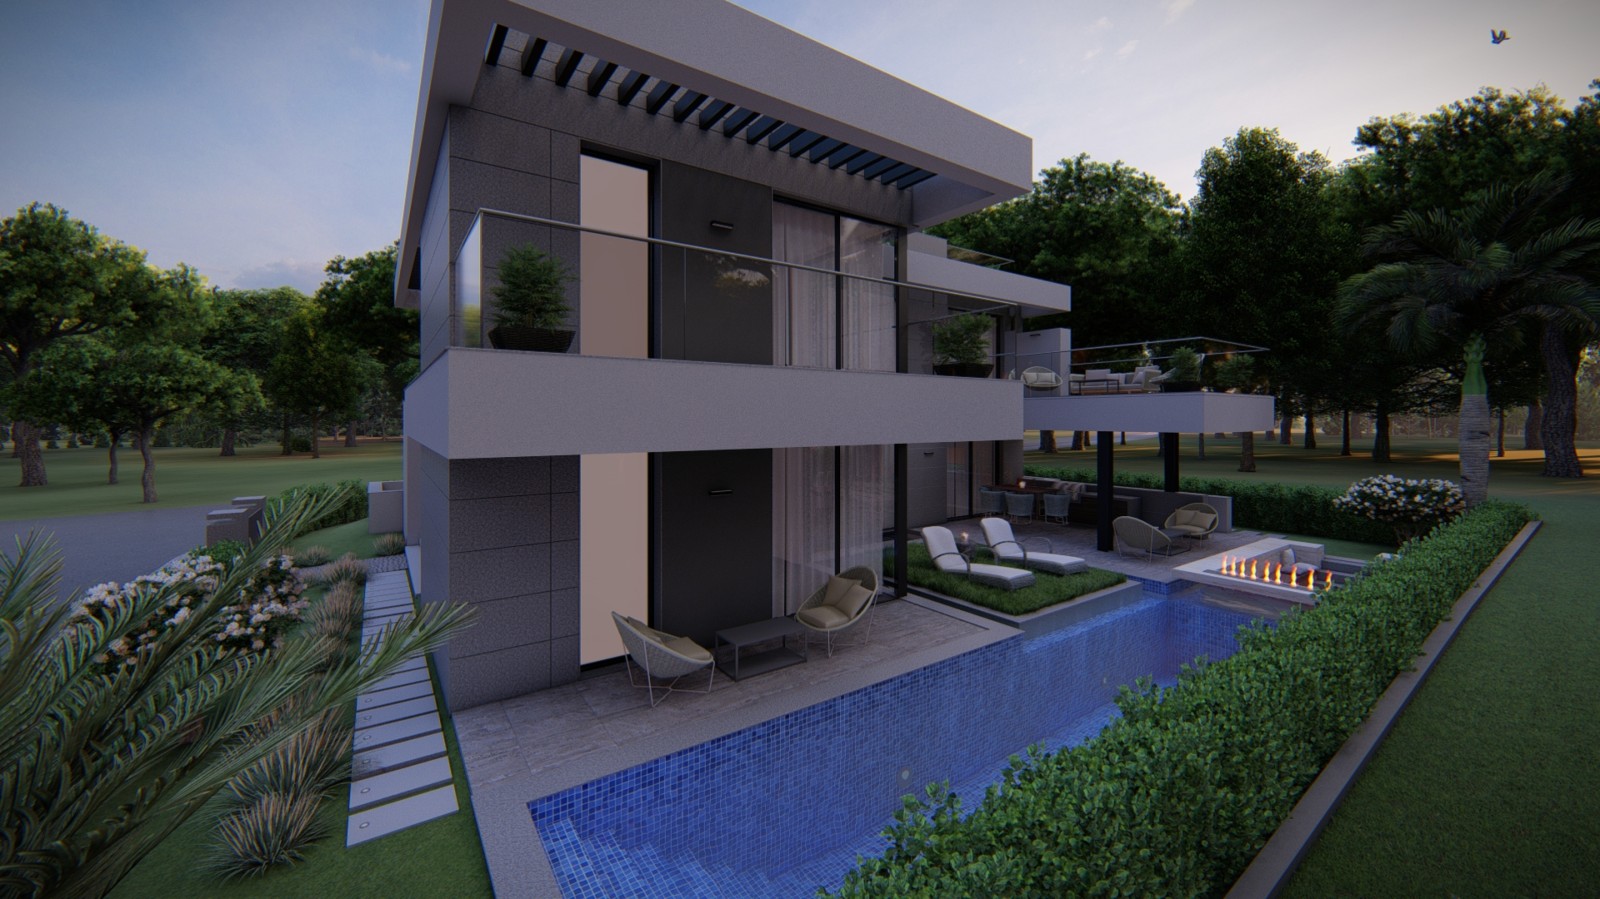 4 Bedroom Villa with pool, under construction, for sale in Vilamoura, Algarve_221399